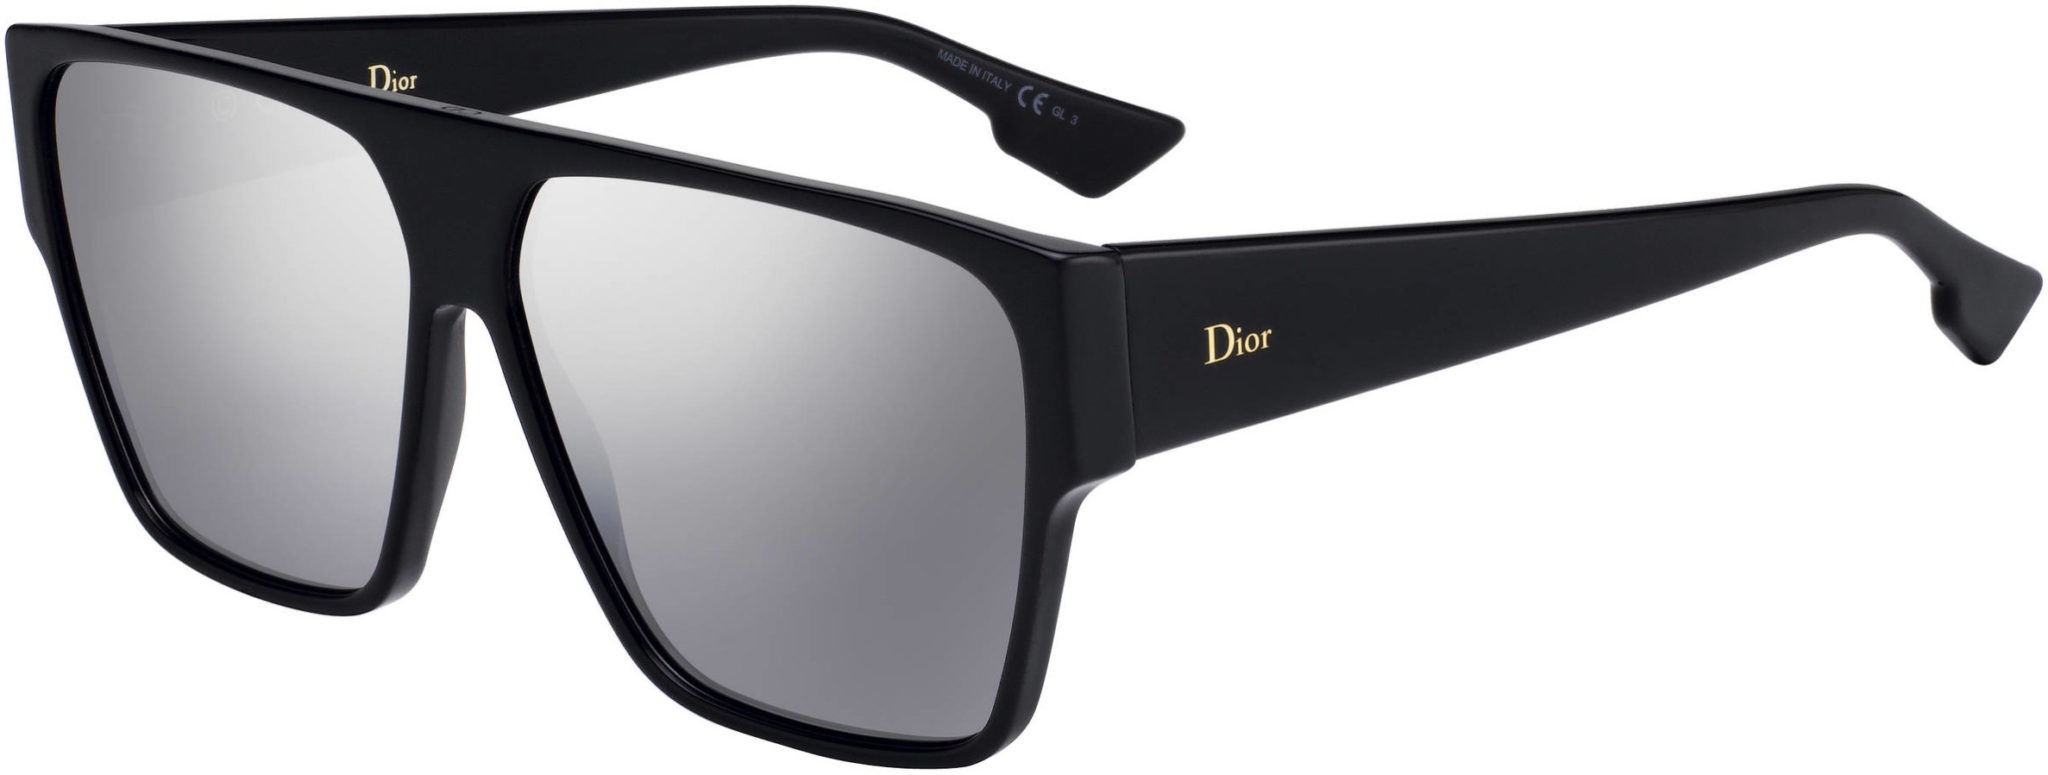 dior hit sunglasses black